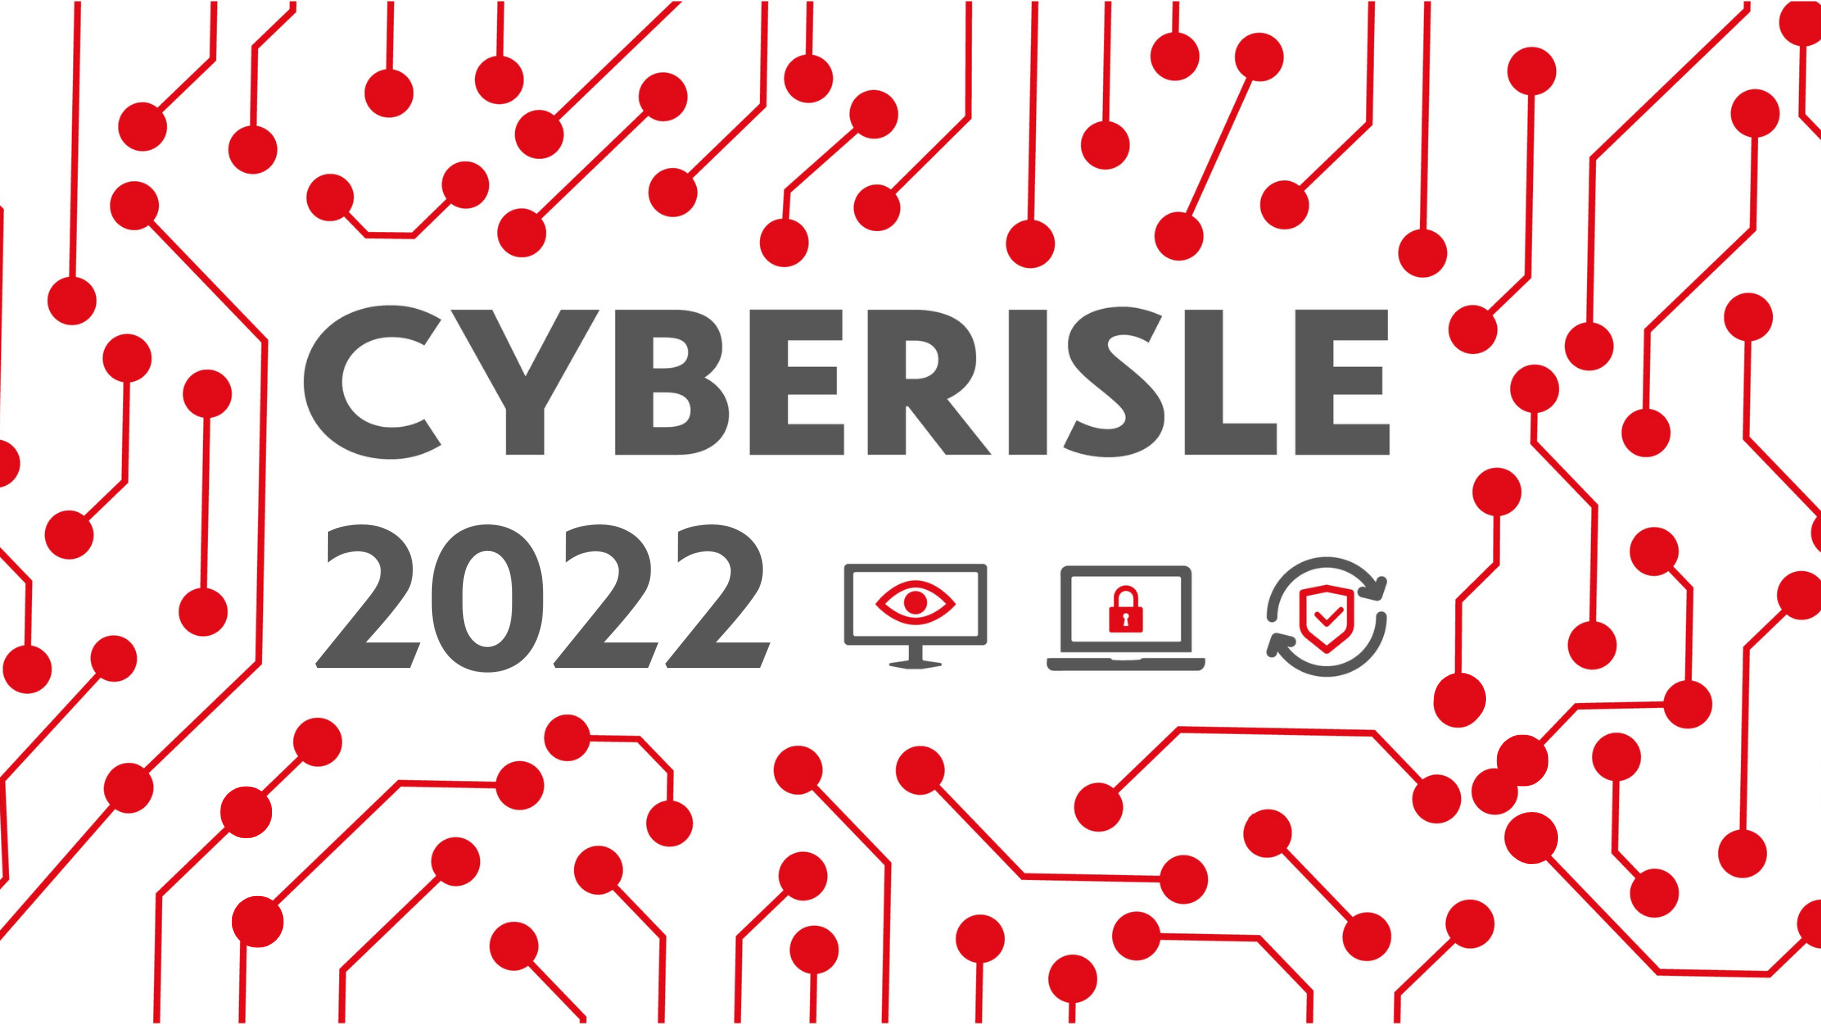 CyberIsle 2022 event